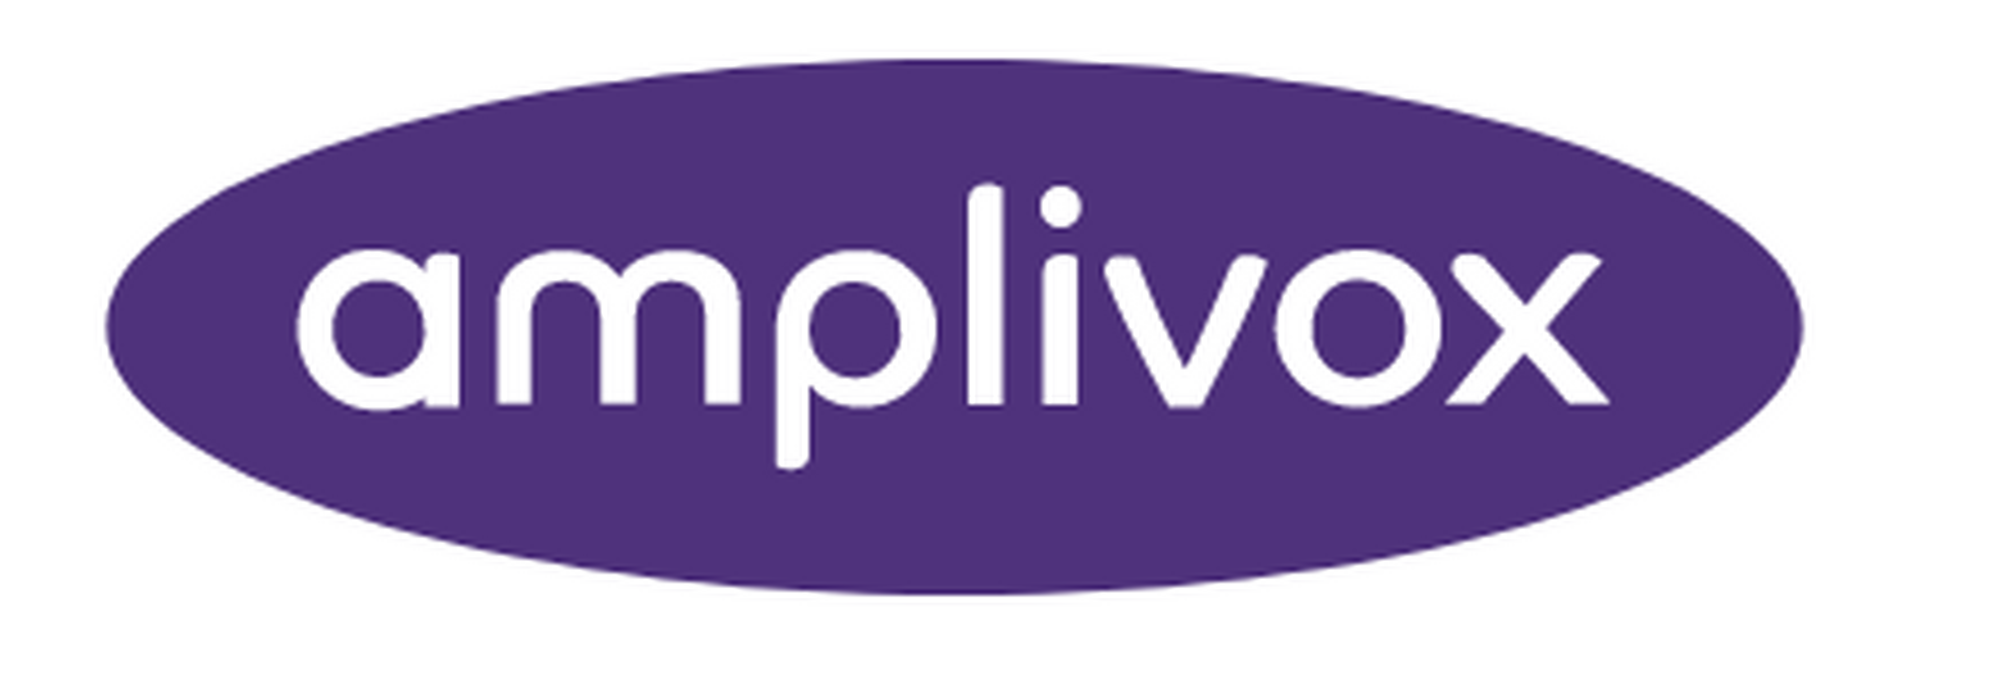 amplivox-logo